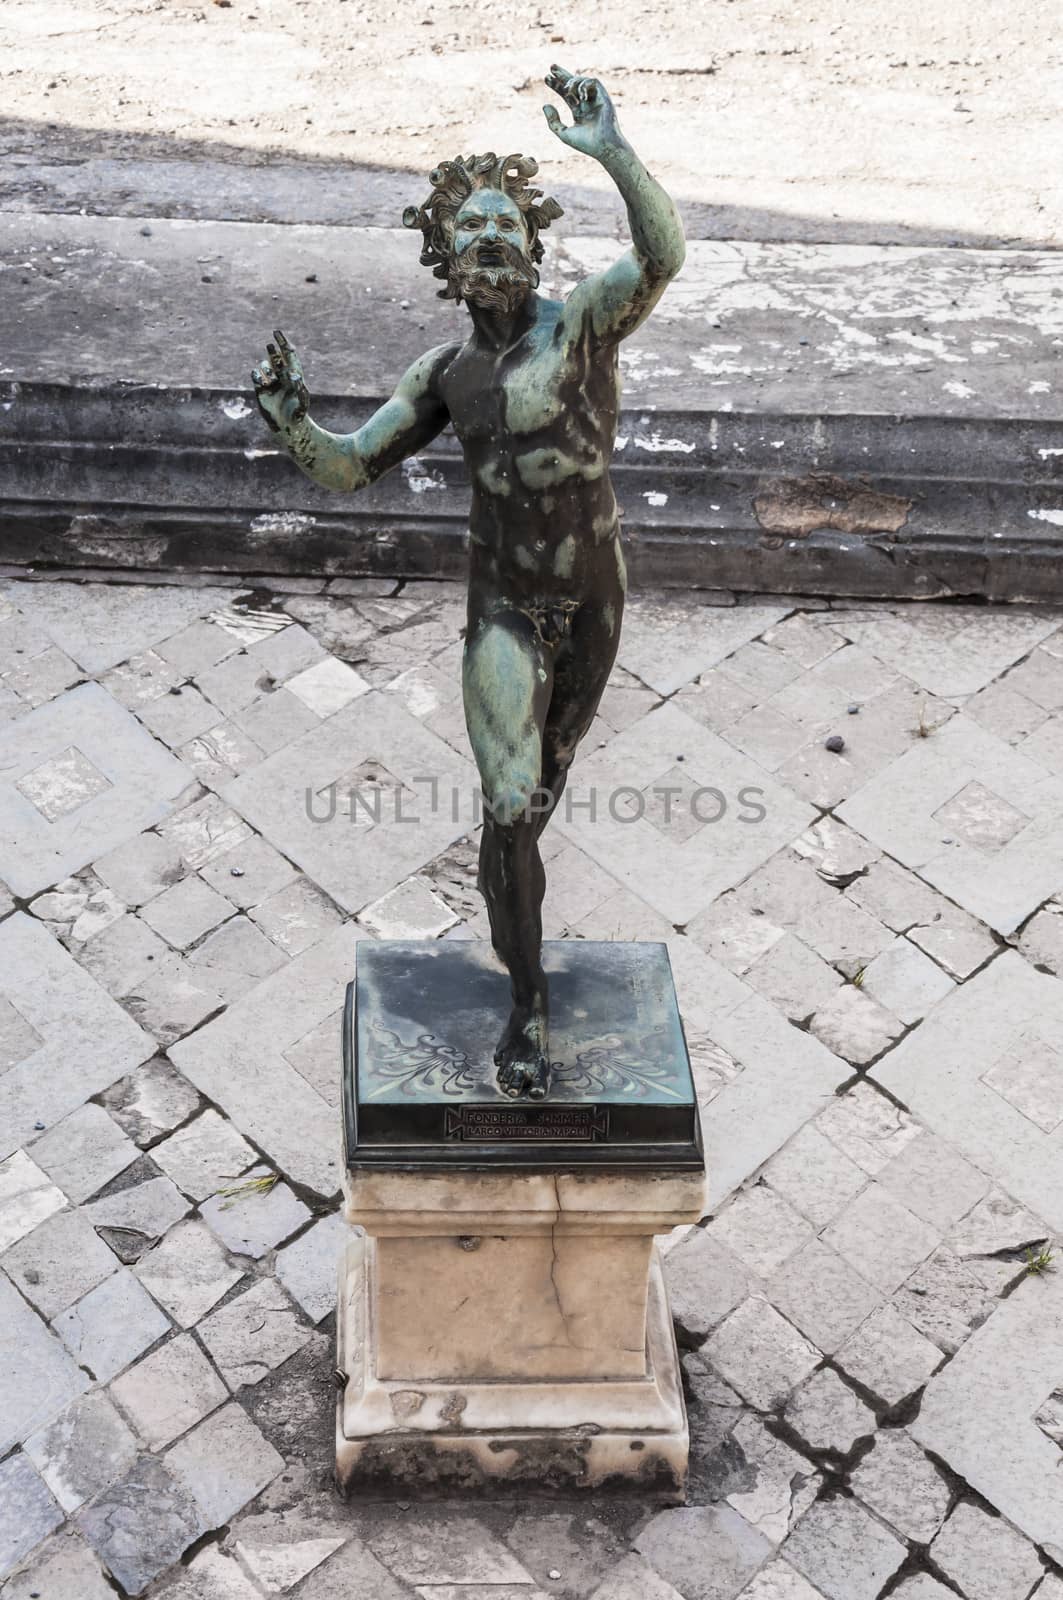 the Fauno bronze statue inside the pompeii ruins, italy